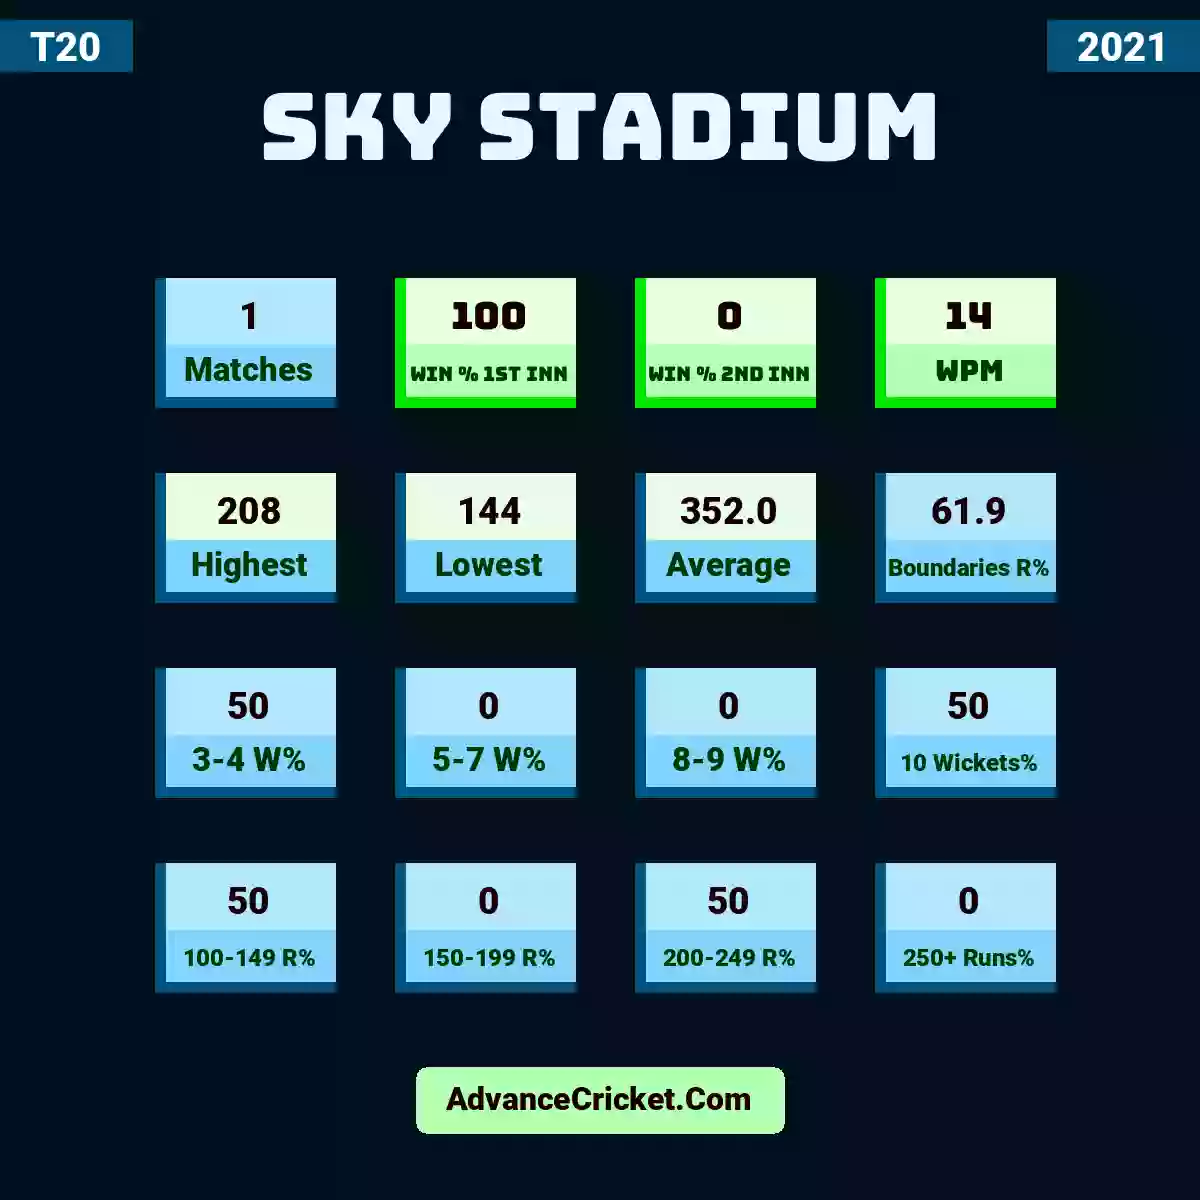 Image showing Sky Stadium with Matches: 1, Win % 1st Inn: 100, Win % 2nd Inn: 0, WPM: 14, Highest: 208, Lowest: 144, Average: 352.0, Boundaries R%: 61.9, 3-4 W%: 50, 5-7 W%: 0, 8-9 W%: 0, 10 Wickets%: 50, 100-149 R%: 50, 150-199 R%: 0, 200-249 R%: 50, 250+ Runs%: 0.